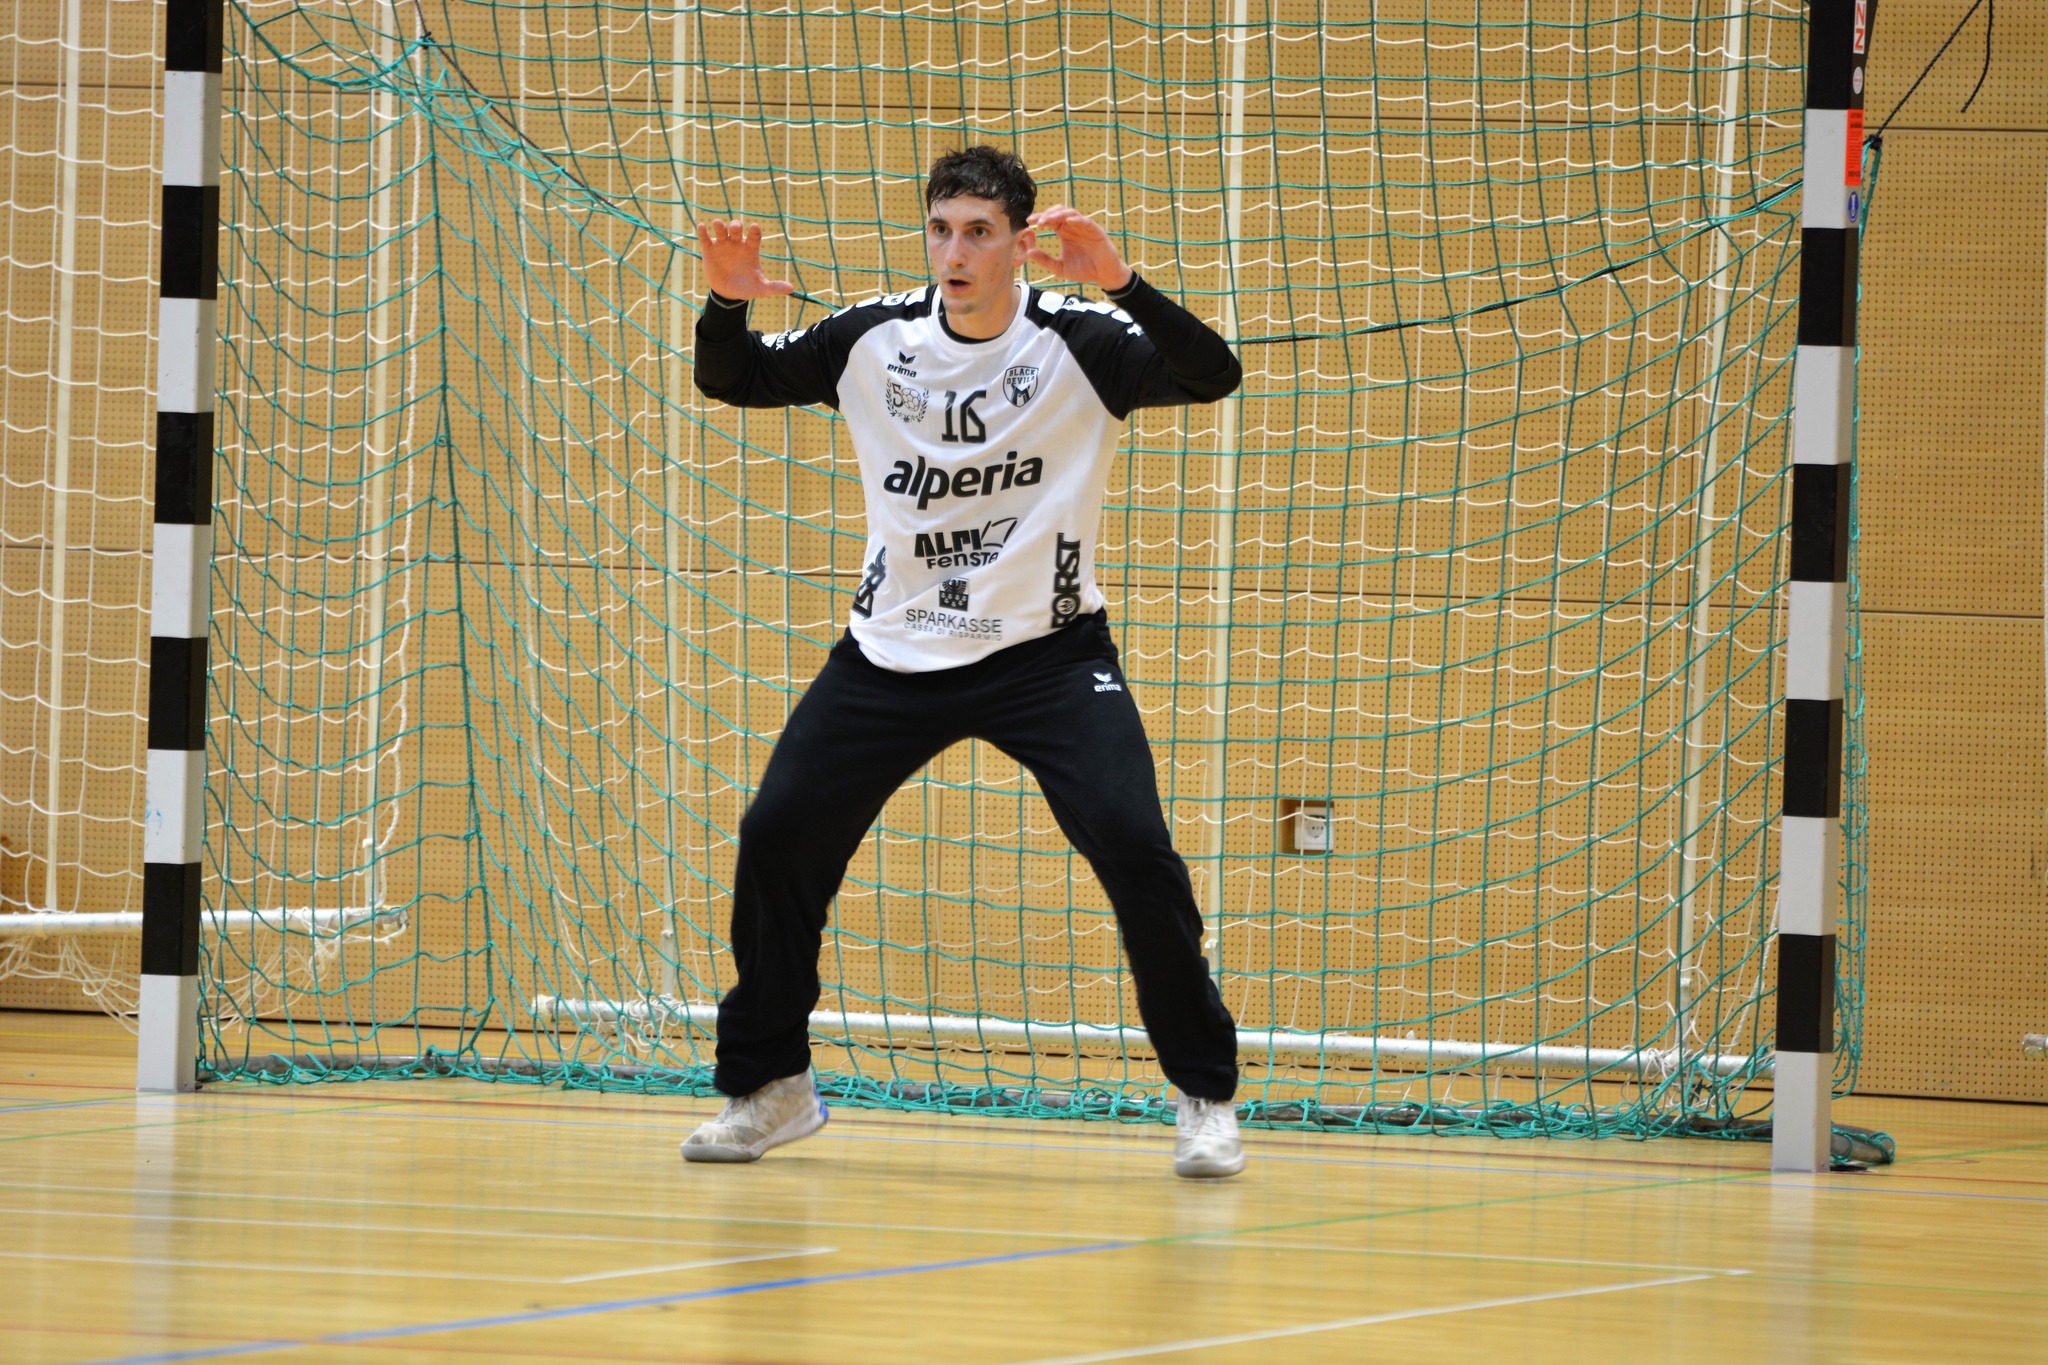 images/meran-handball-colleluori.jpeg